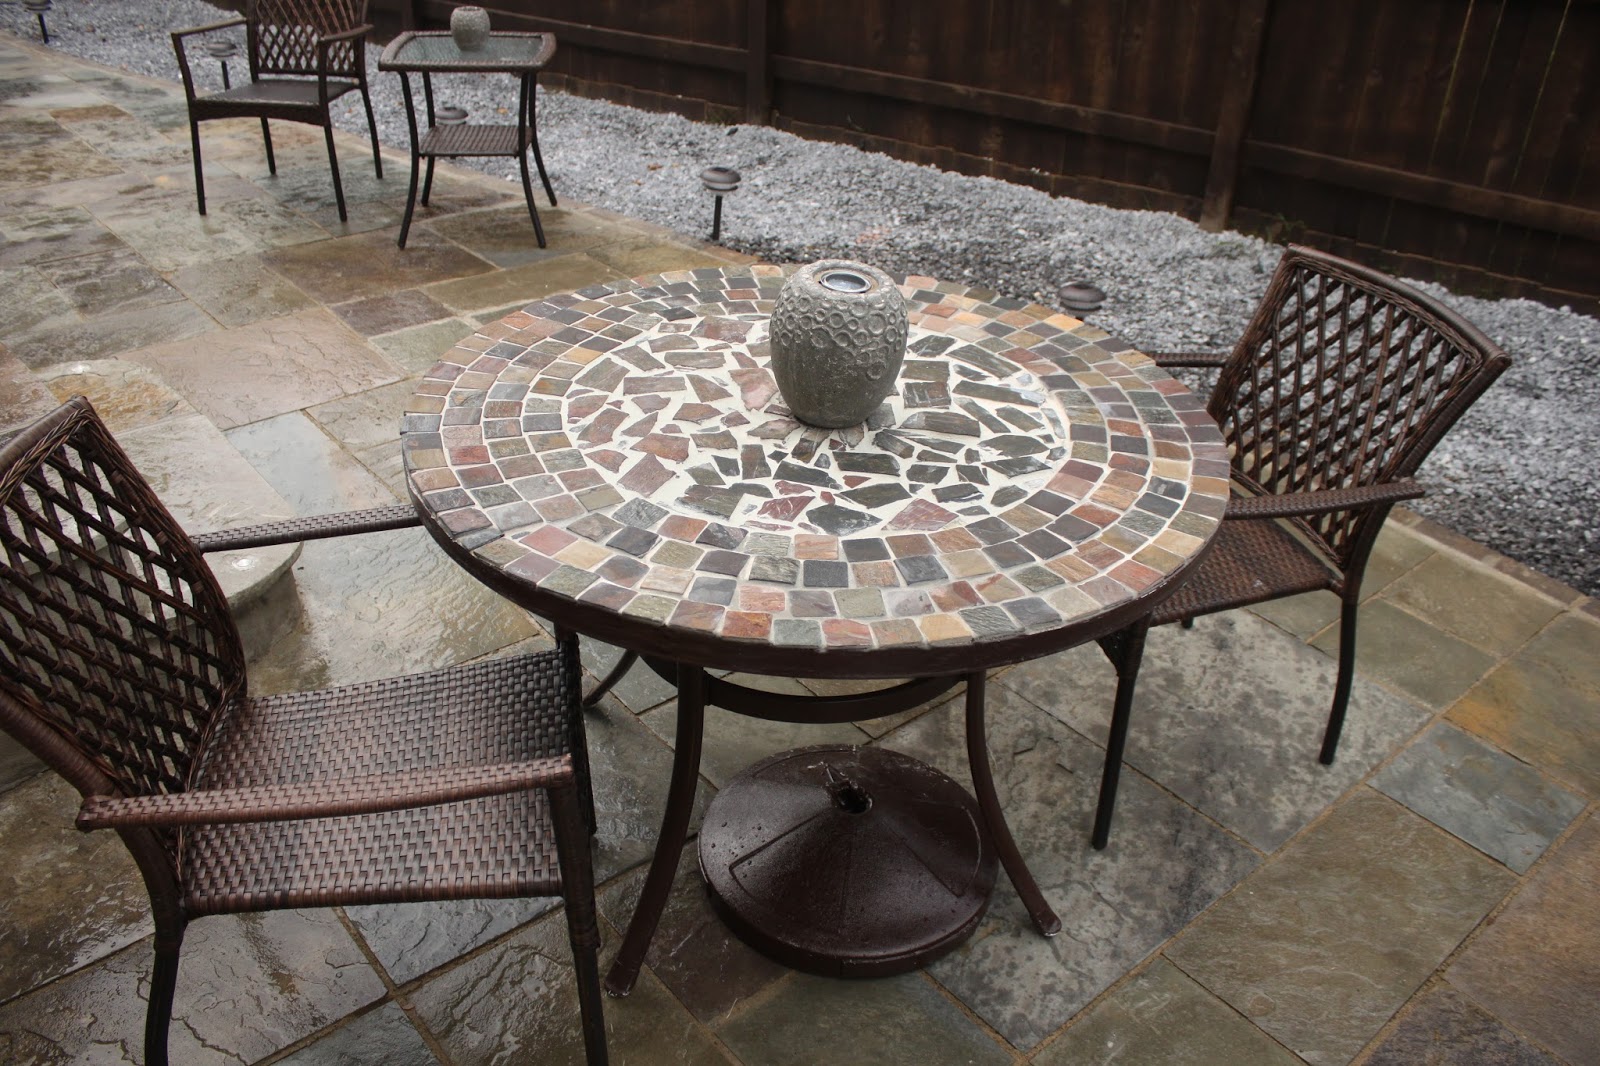 DIY Stone Table - Beaute' J'adore